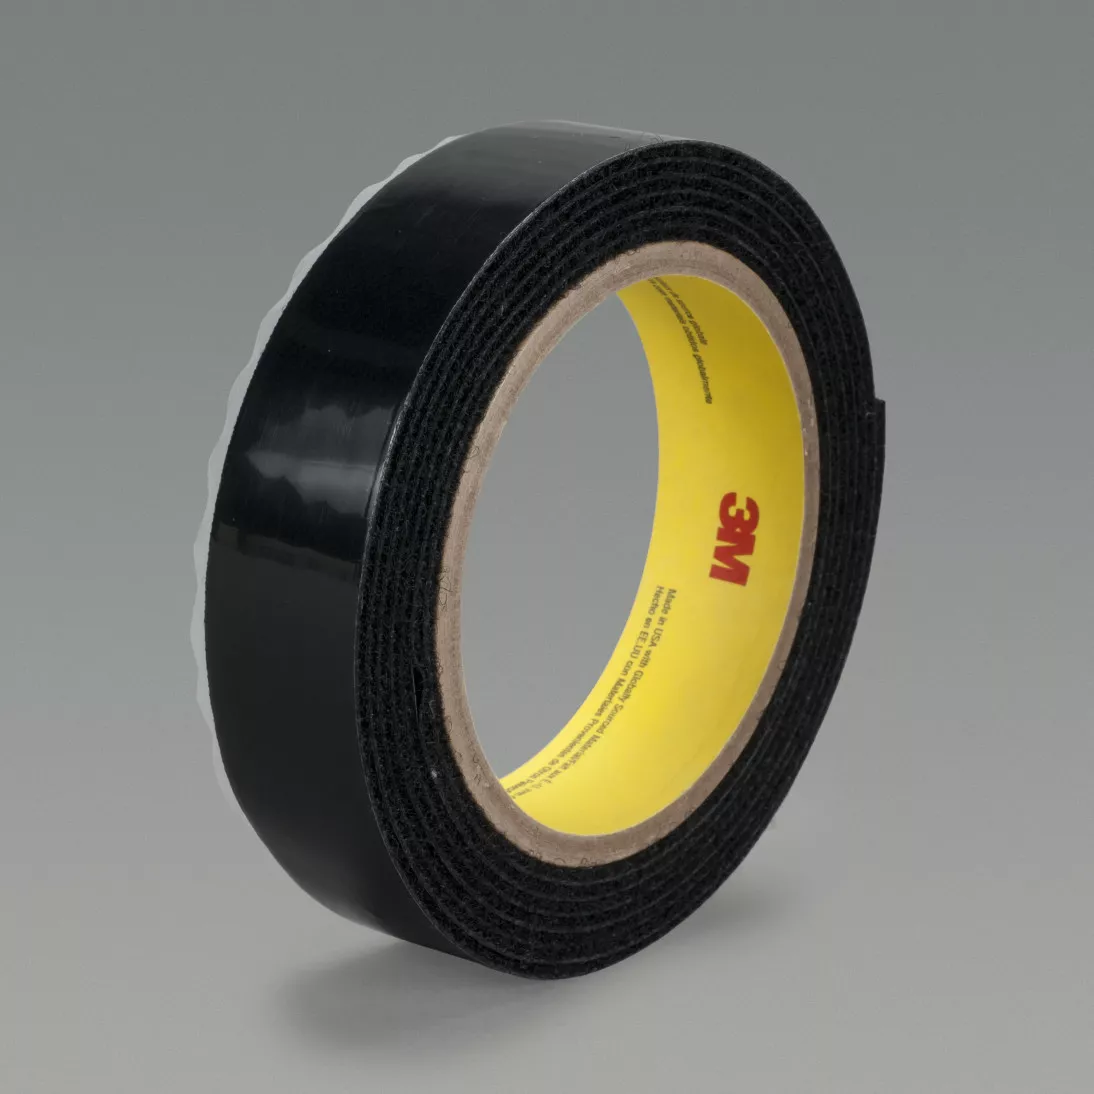 3M™ Plasticizer Resistant Loop Fastener SJ3523, Black, 4 in x 50 yd, 1
per case